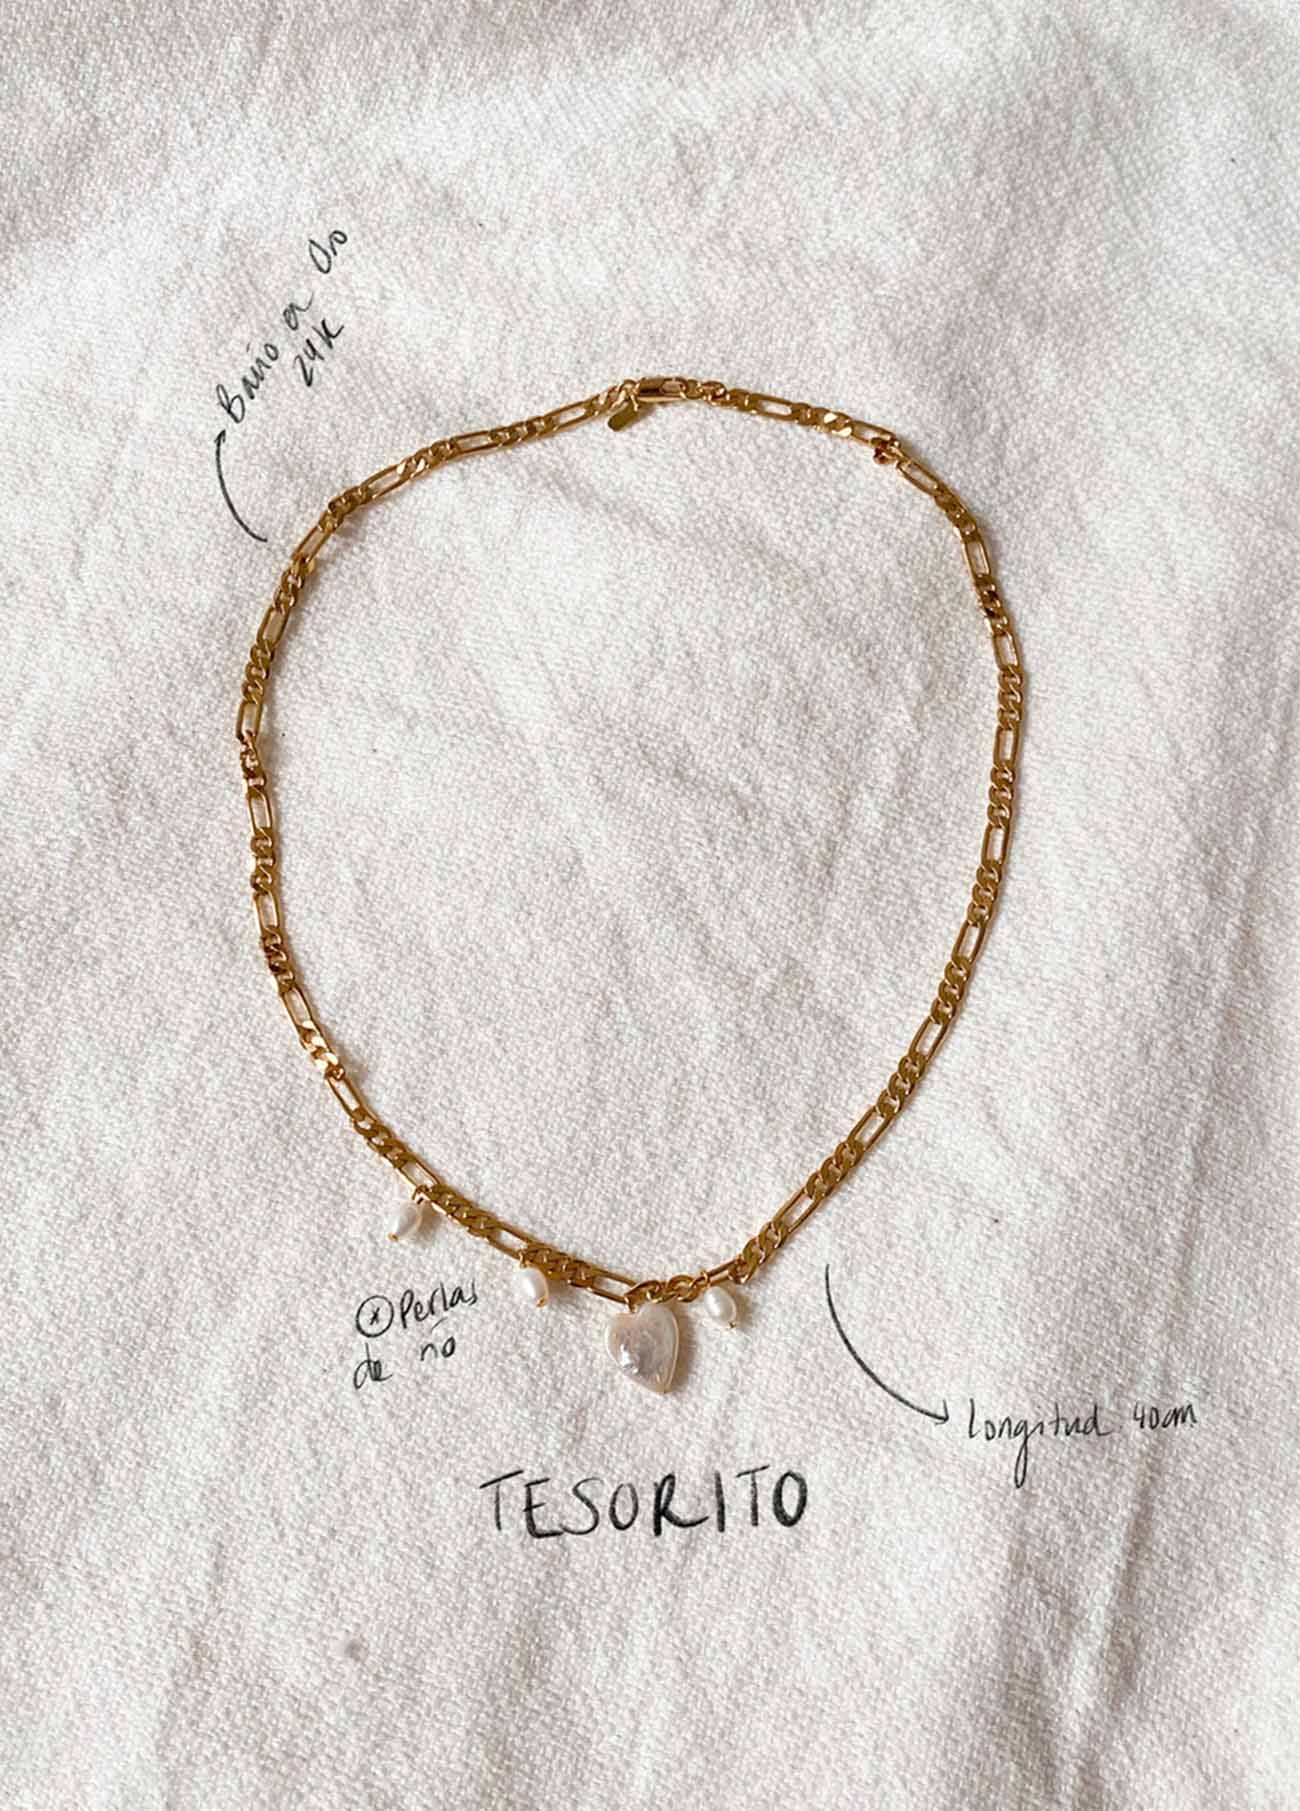 Tesorito Chain